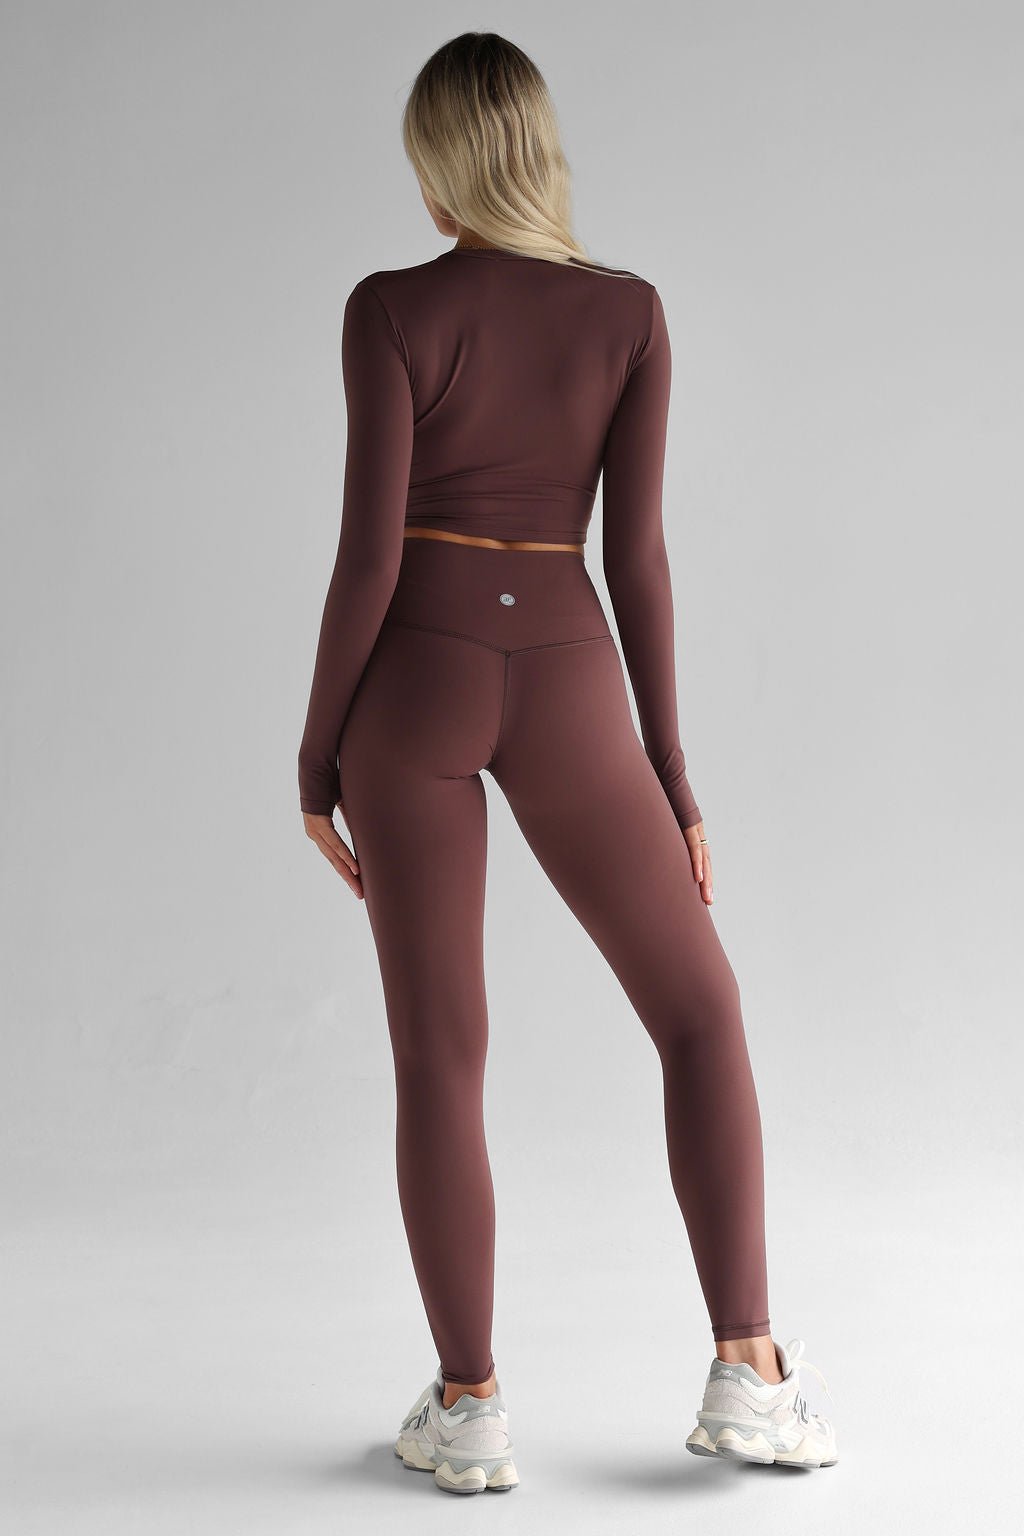 wilo purple brown color flare leggings activewear, - Depop